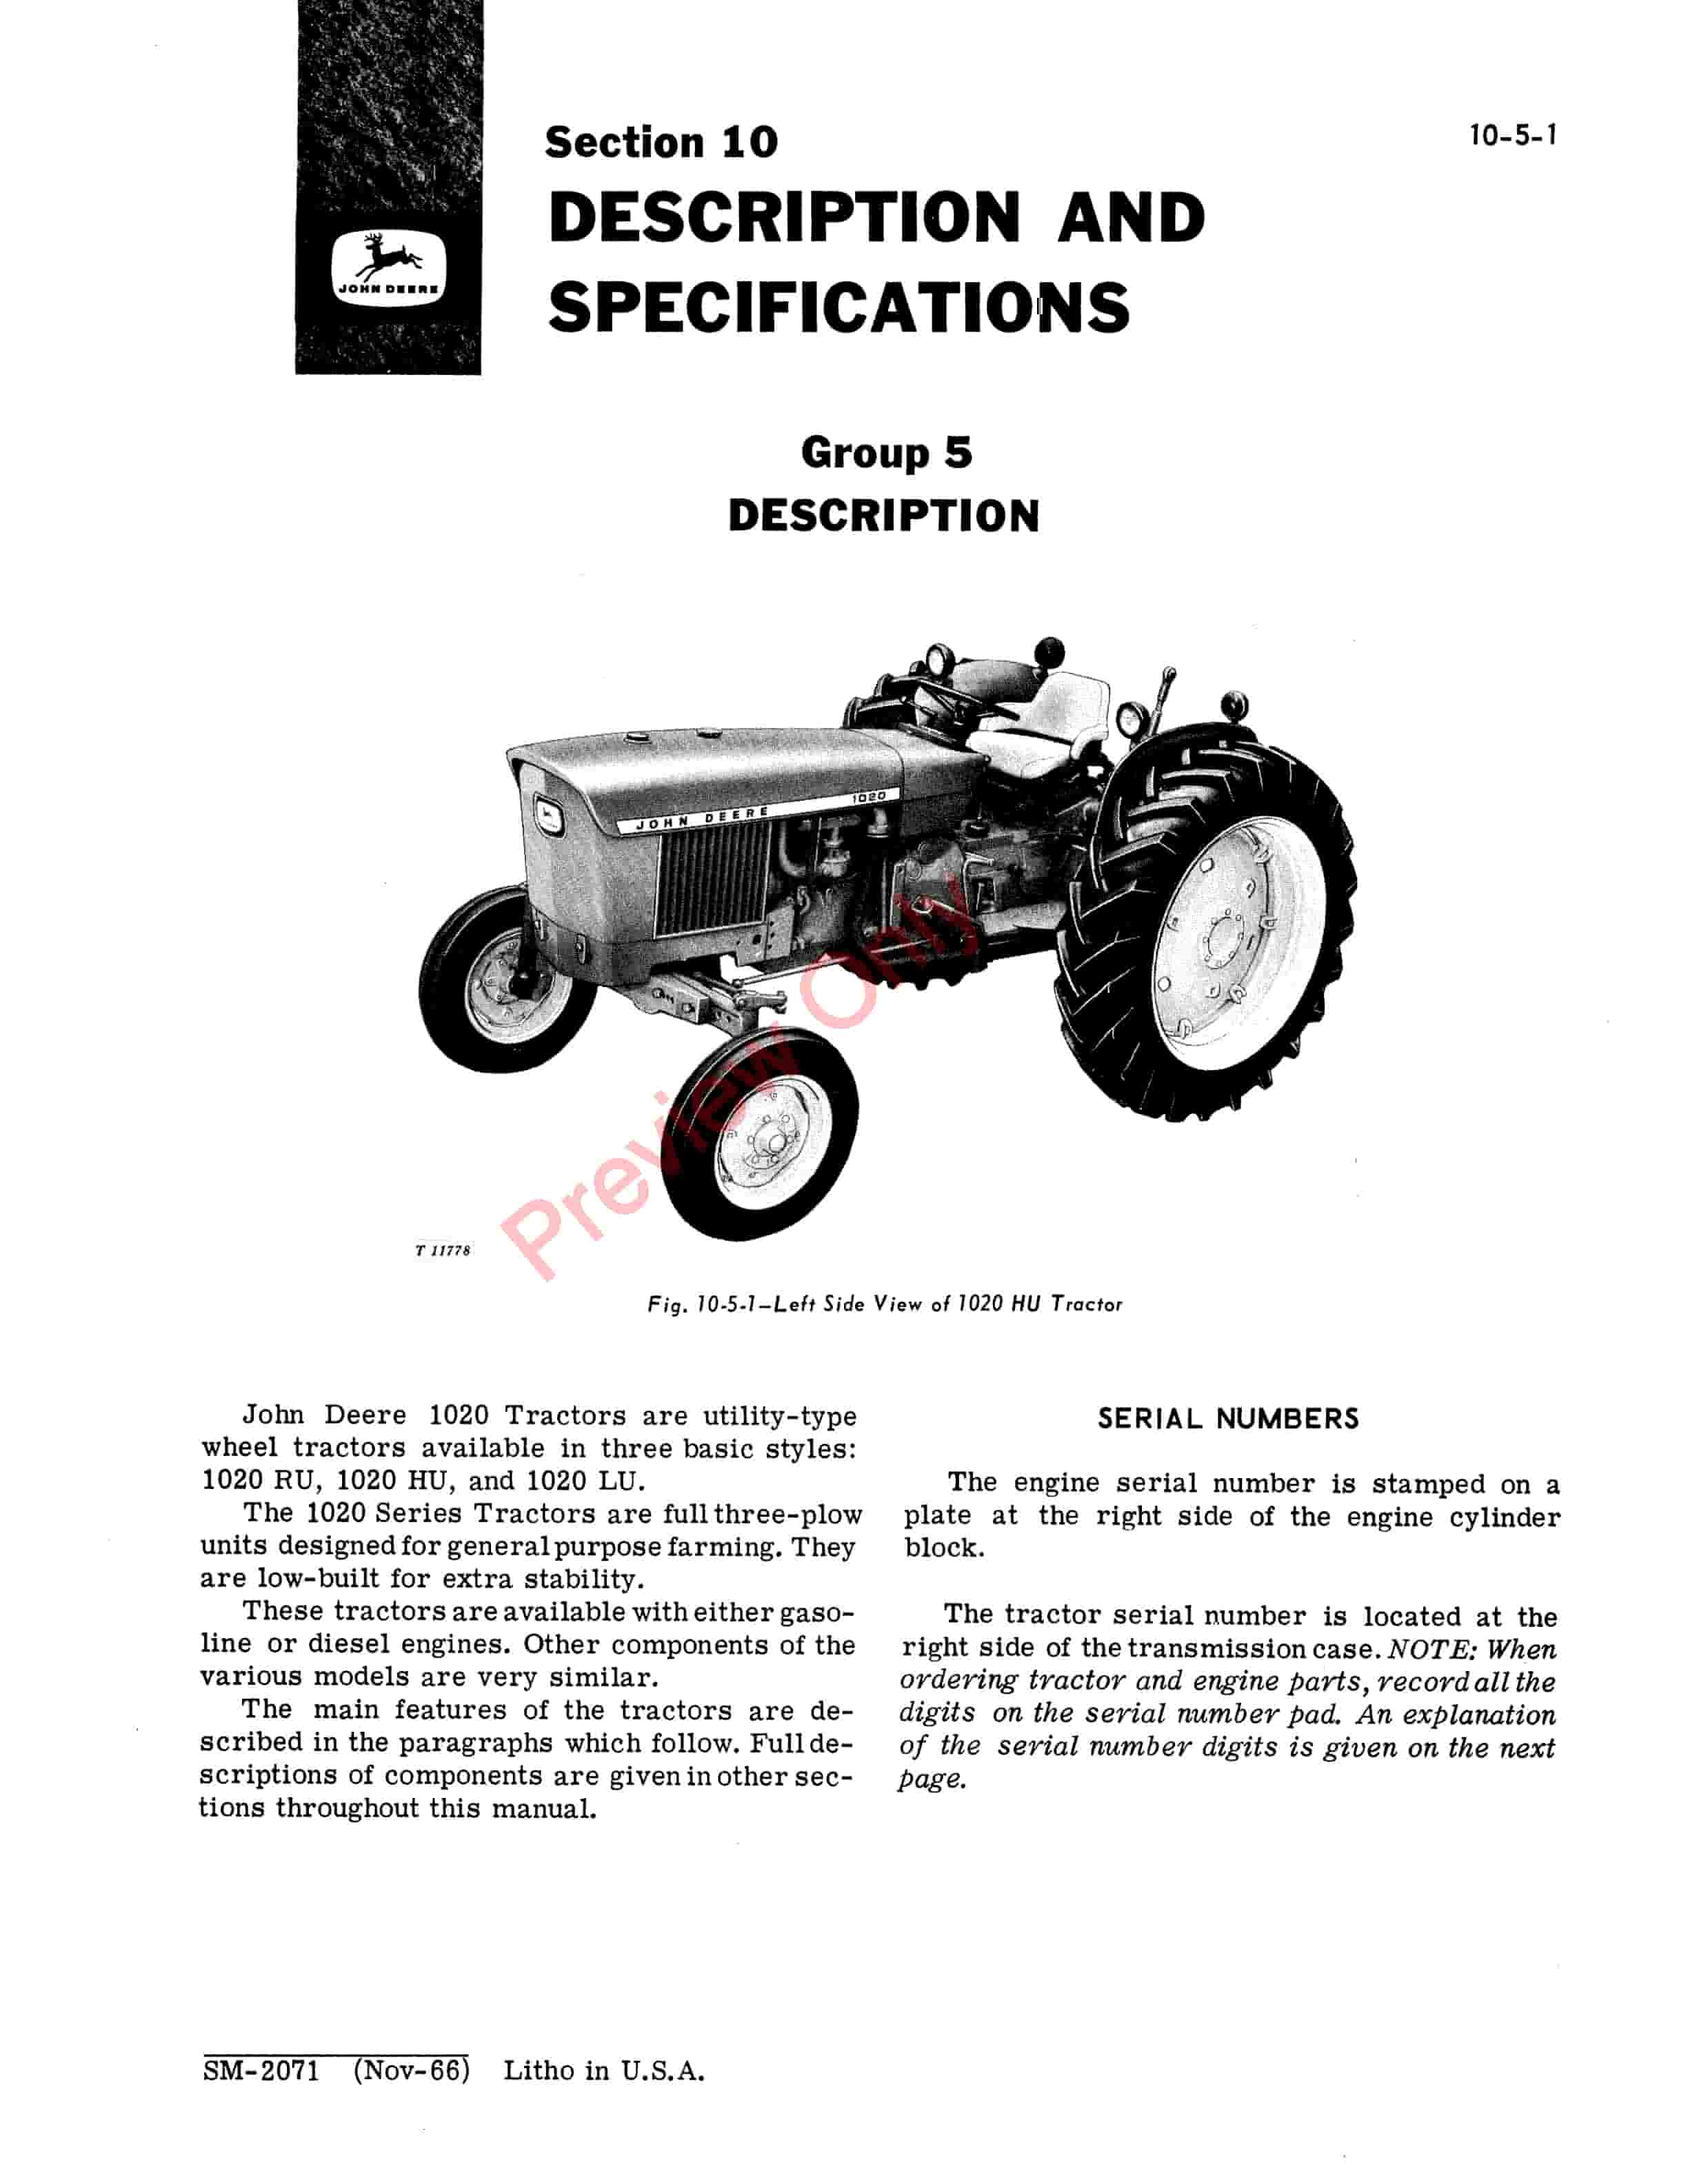 John Deere 1020 Series Tractors Service Manual SM2071 01JUL69 5